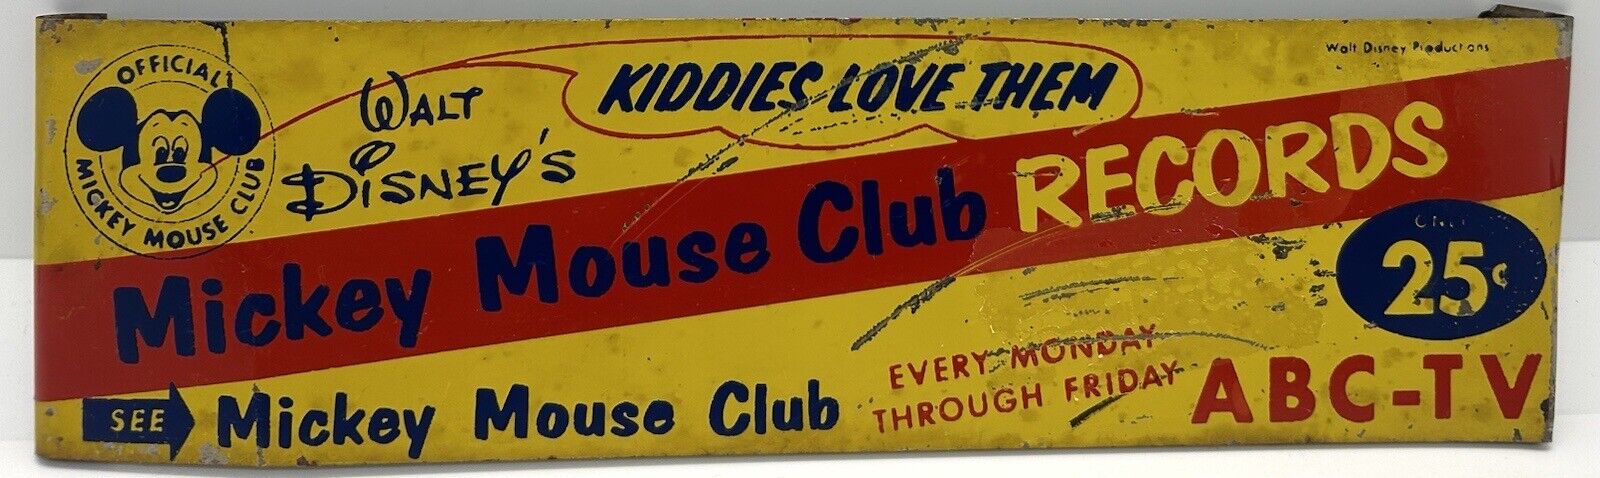 Vintage Walt Disney Mickey Mouse Club Records Tin Display Advertising Sign 